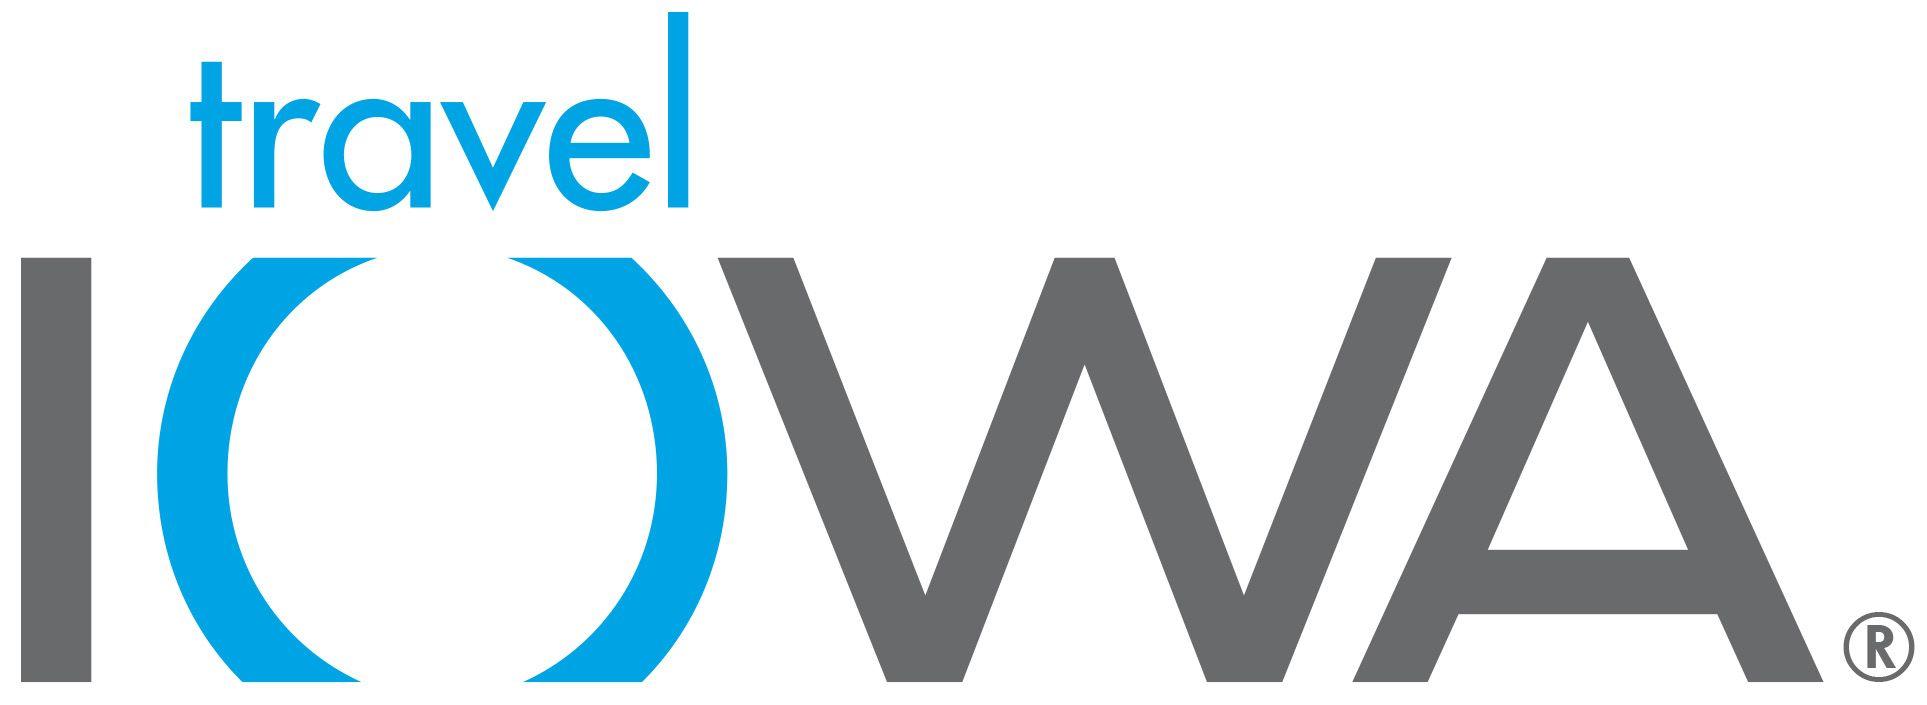 Iwoa Logo - Travel Iowa Logos & Usage